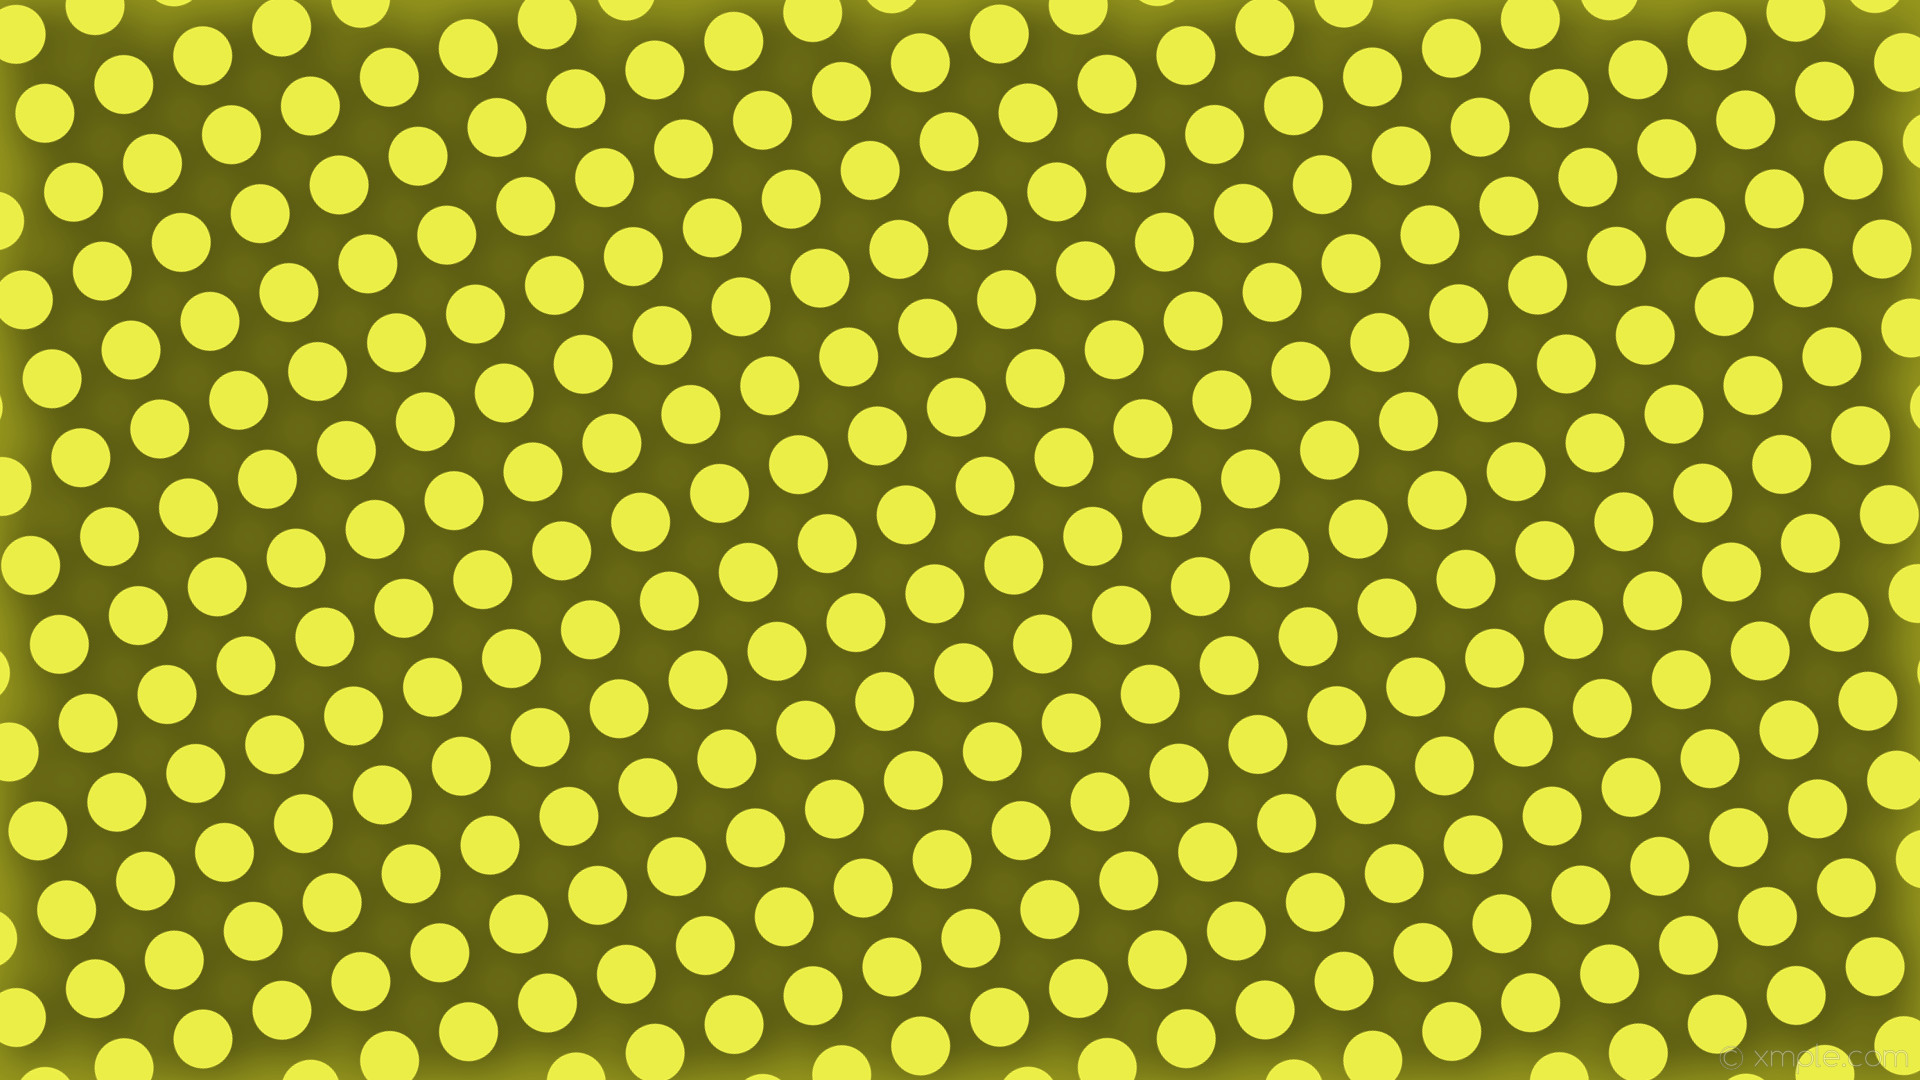 1920x1080 wallpaper dots drop shadow yellow polka #98991d #ecee48 20Â° 120Â° 59px 84px